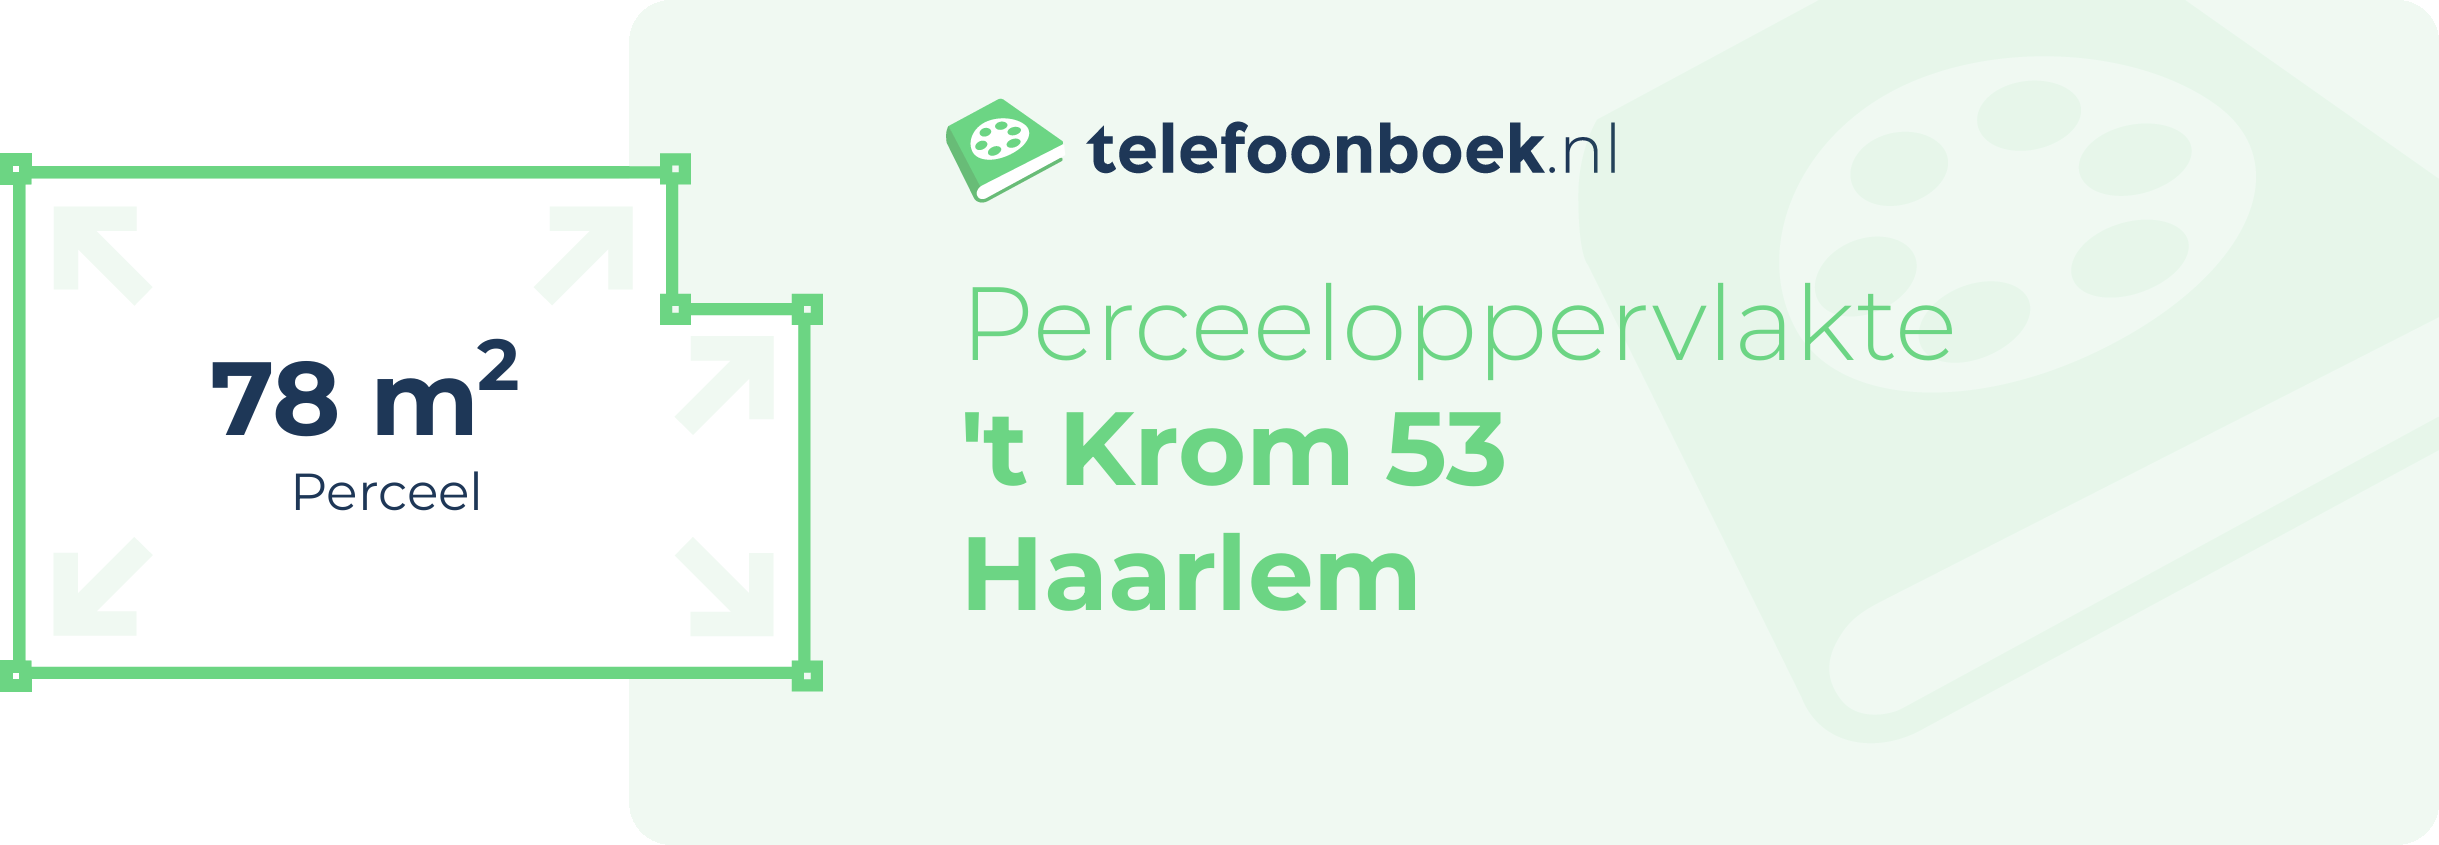 Perceeloppervlakte 't Krom 53 Haarlem